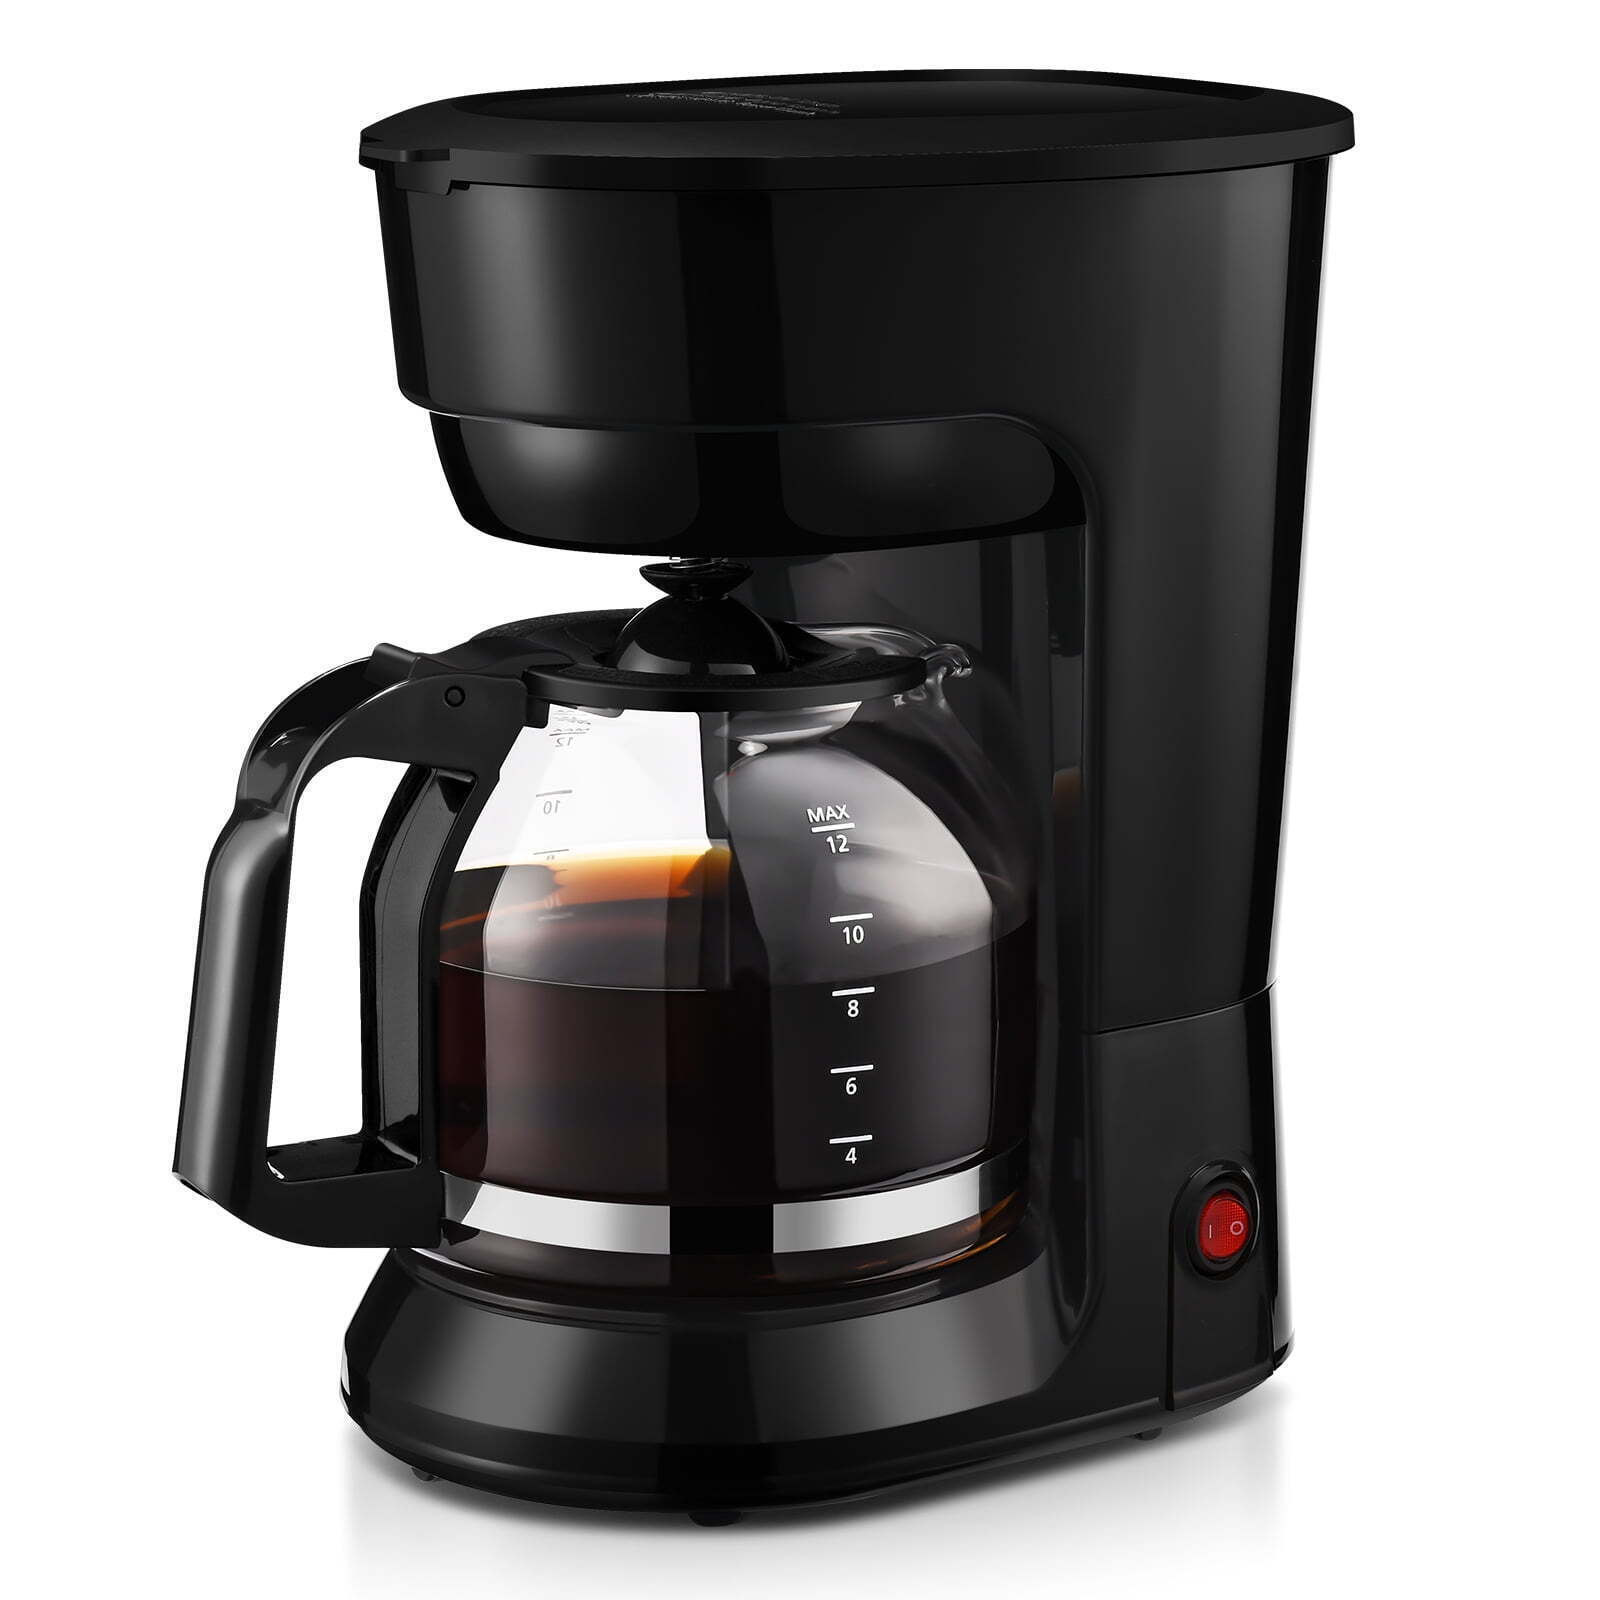 Hot！Mainstays 12 Cup Coffee Maker Black, Drip Coffee Maker